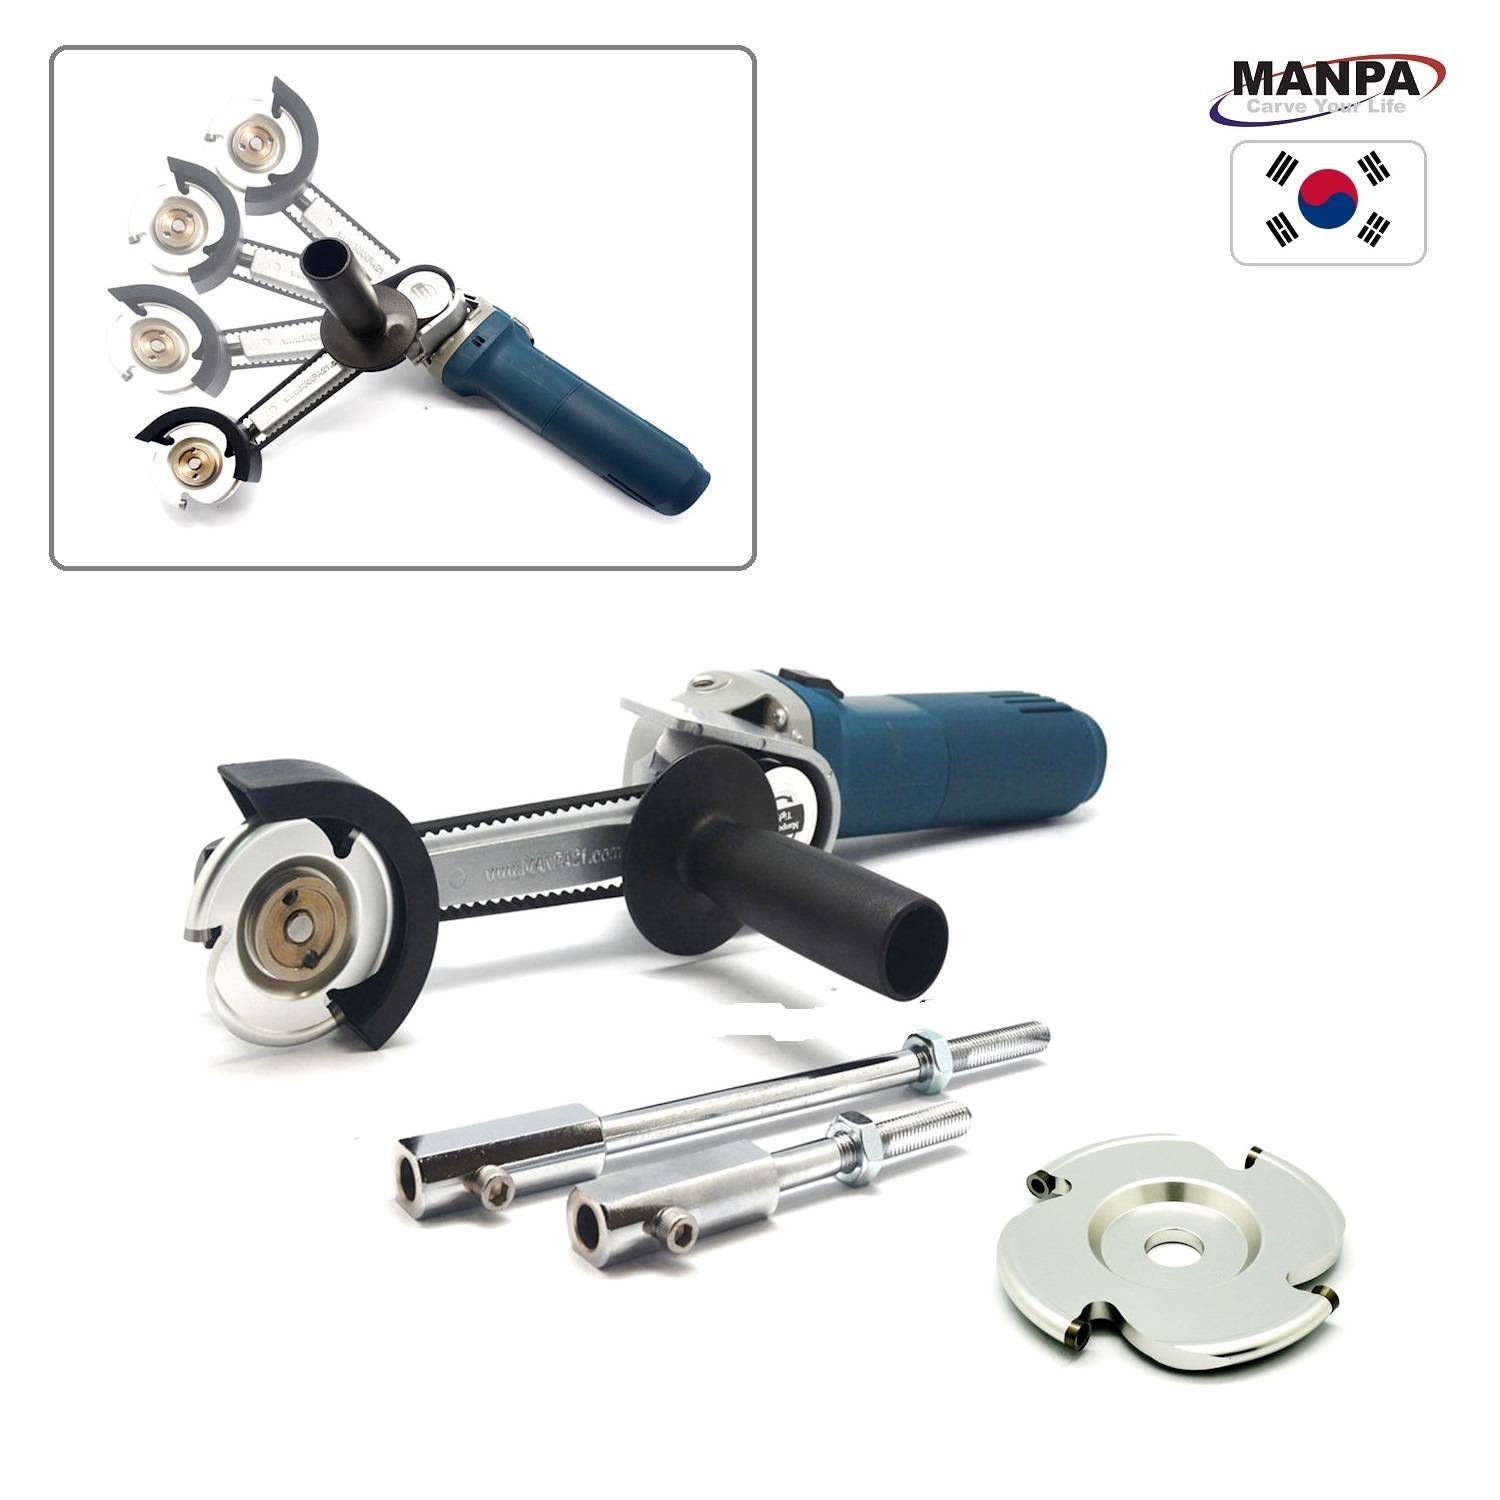 Manpa-Tools-Master-Set-vb